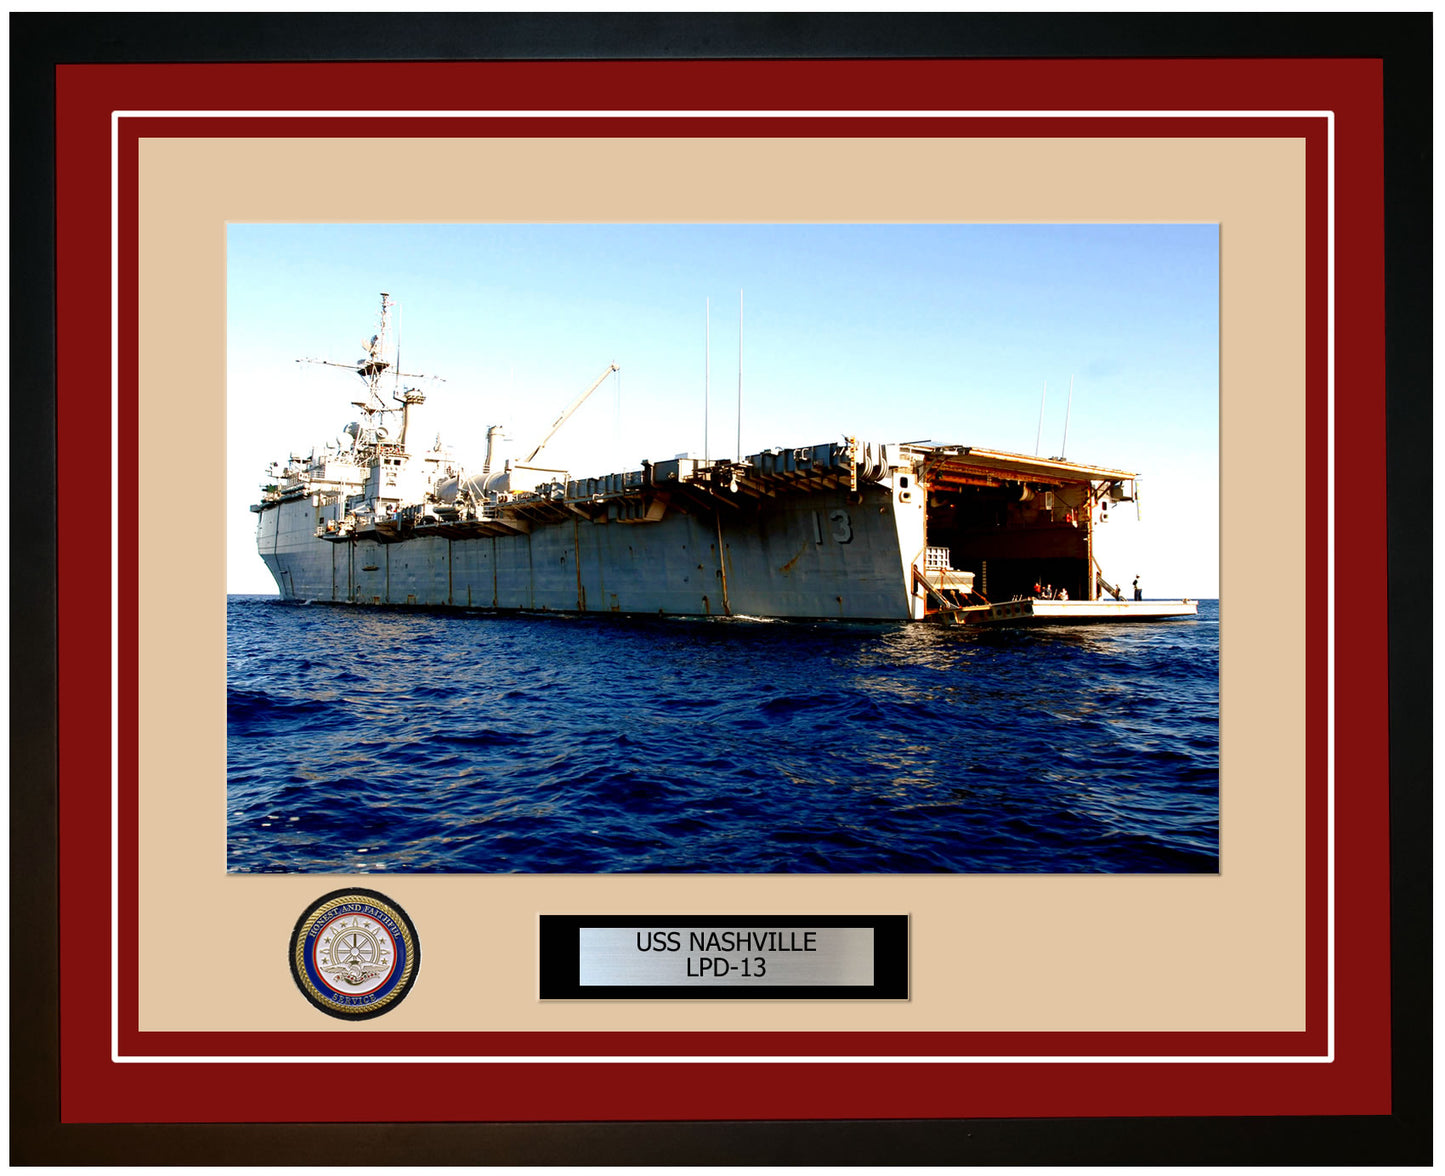 USS Nashville LPD-13 Framed Navy Ship Photo Burgundy